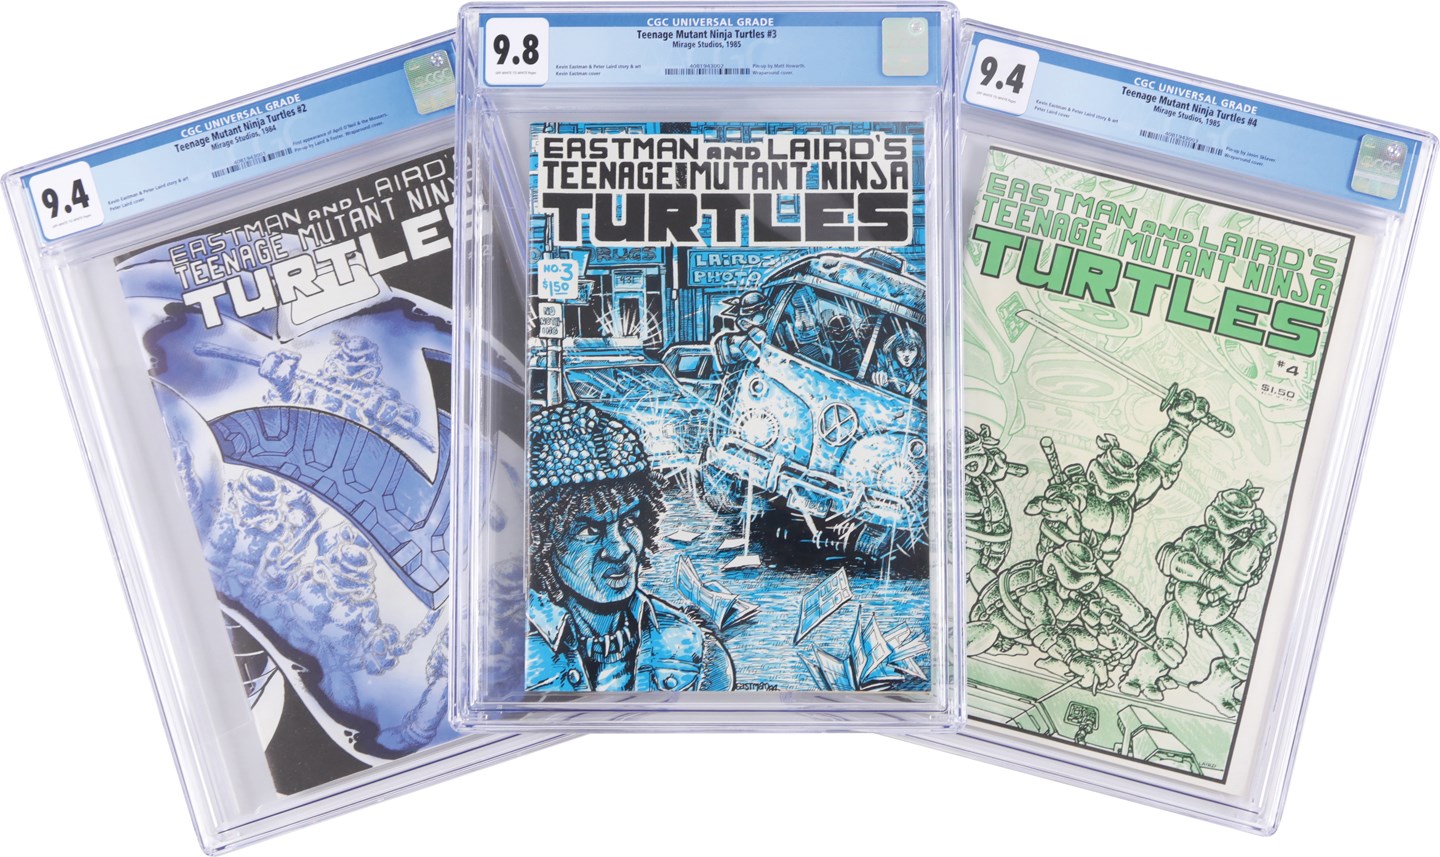 Rock And Pop Culture - 1984-86 Teenage Mutant Ninja Turtles #2-4 First Print (Mirage Studios) CGC High Grade Trio